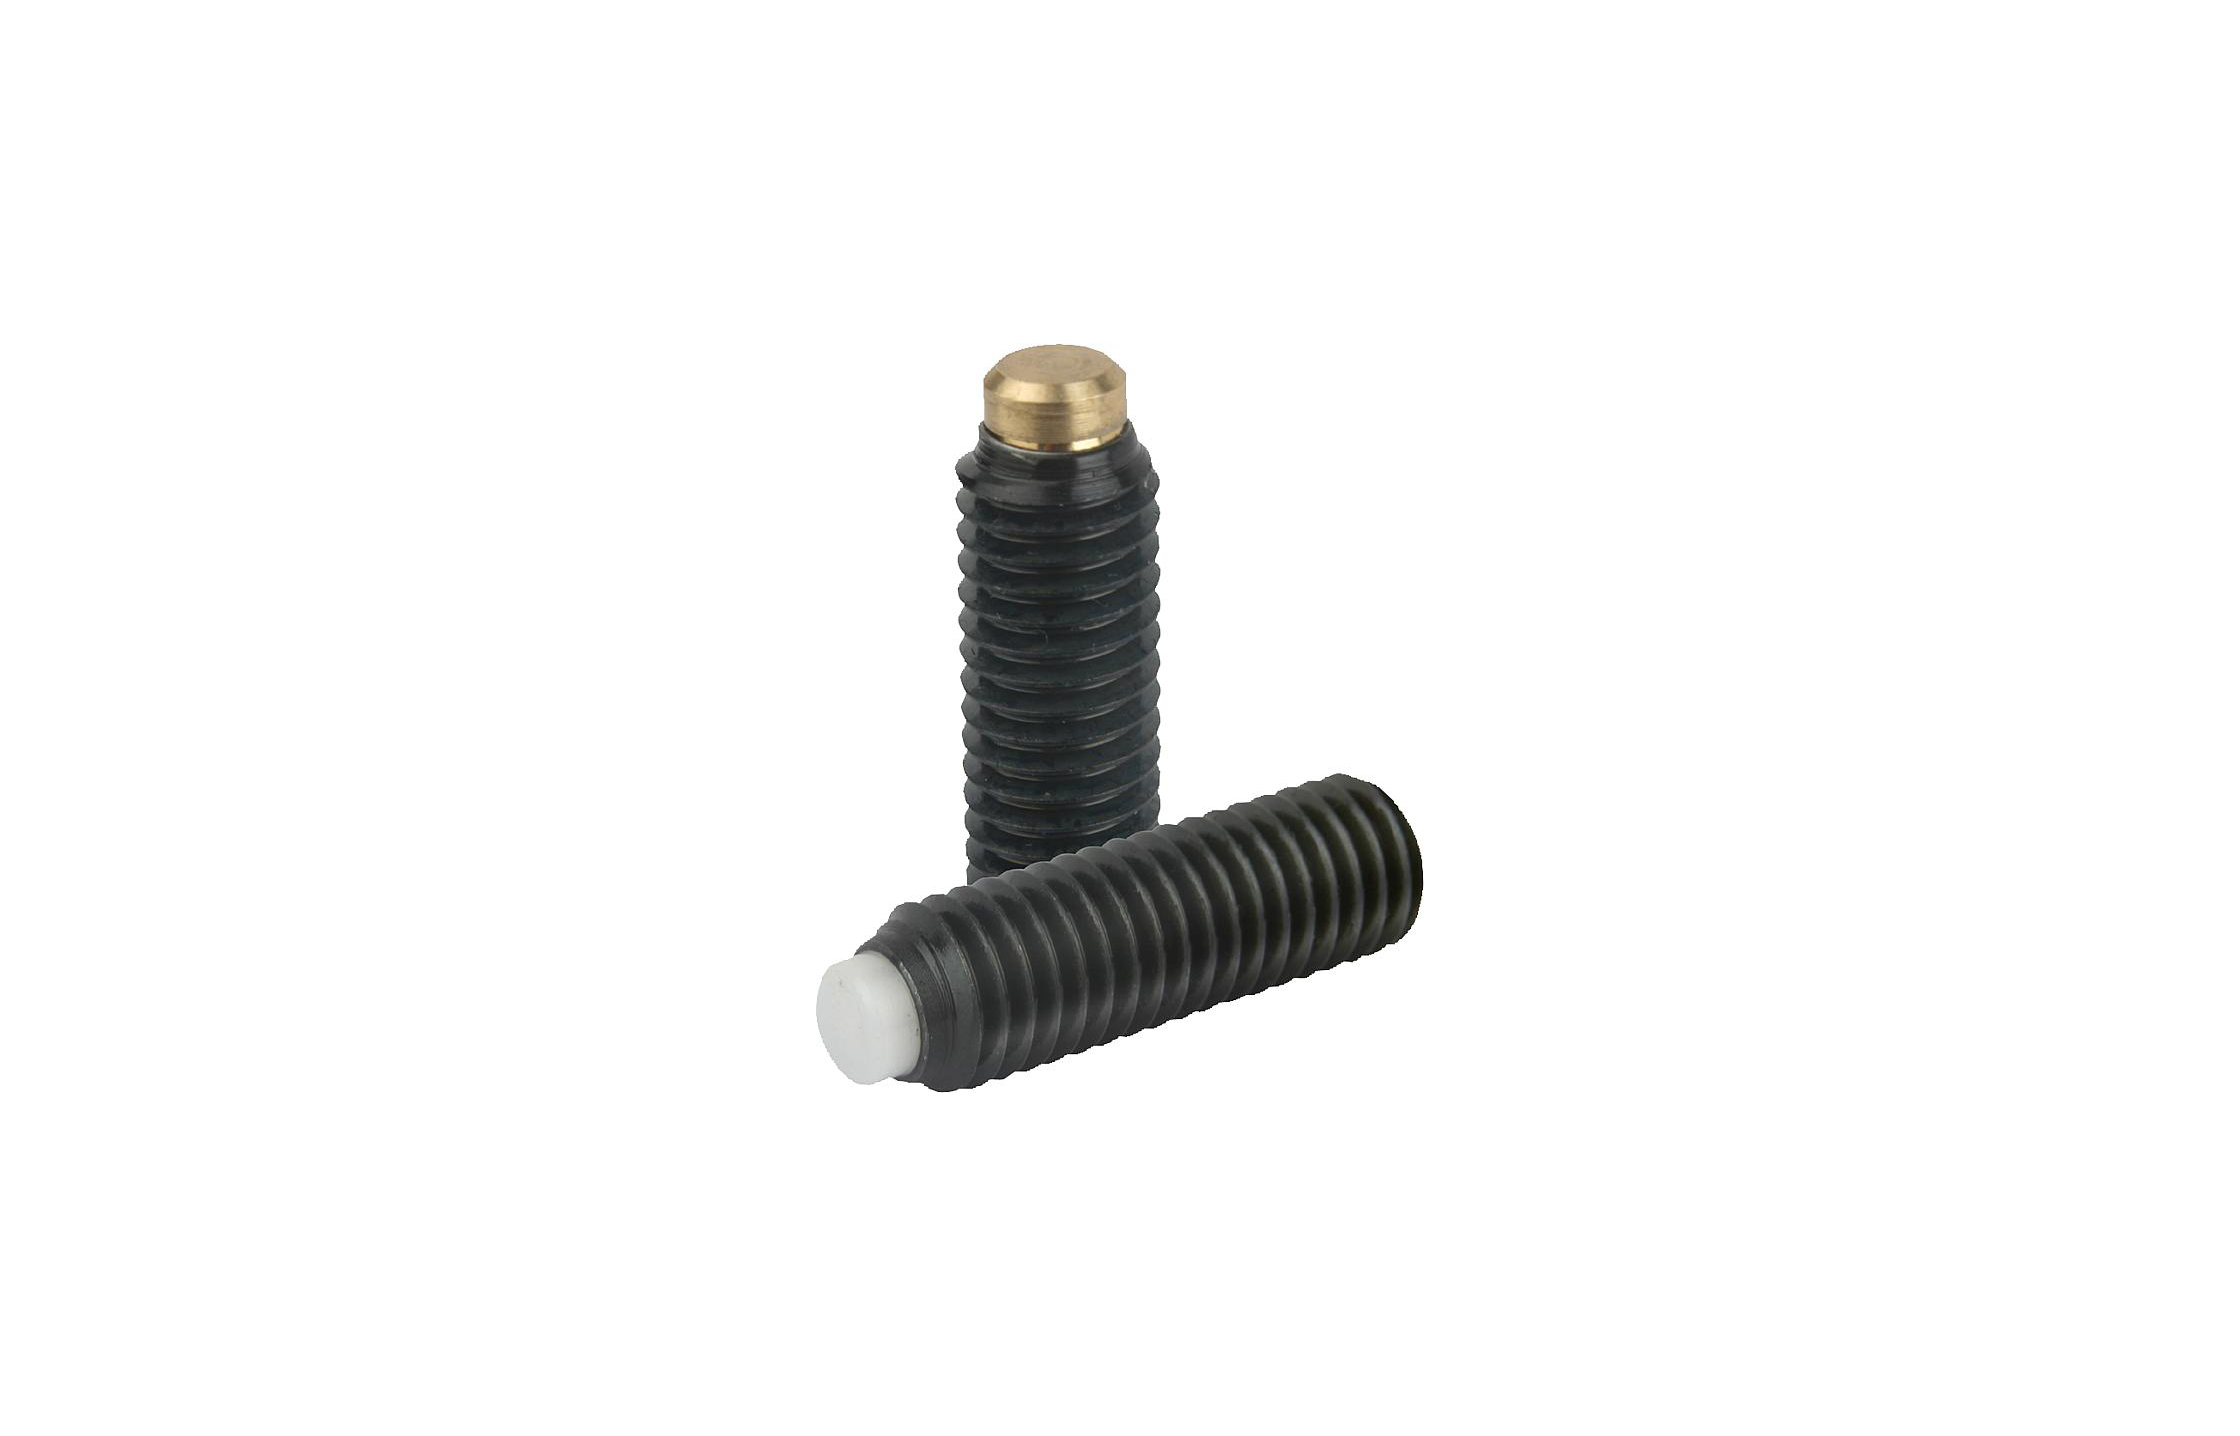 K0389 Thrust screws